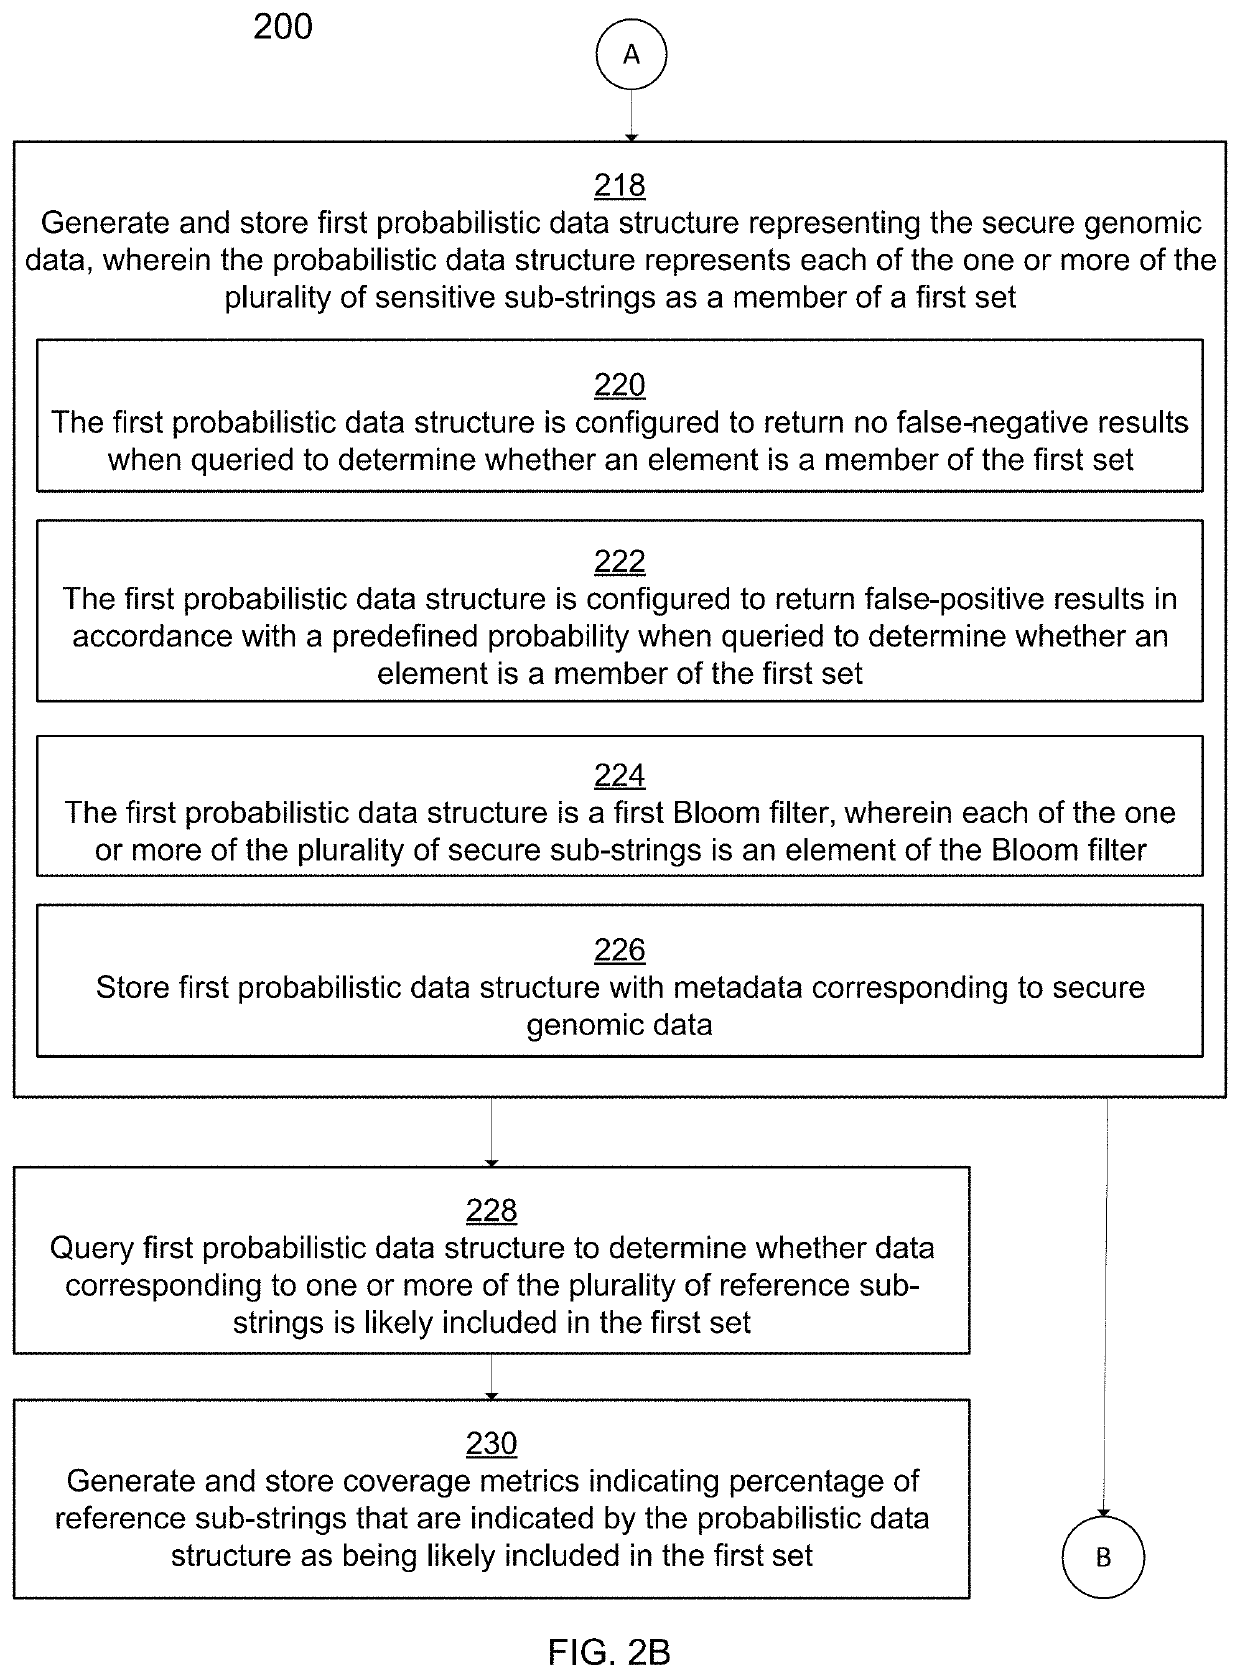 Secure communication of sensitive genomic information using probabilistic data structures